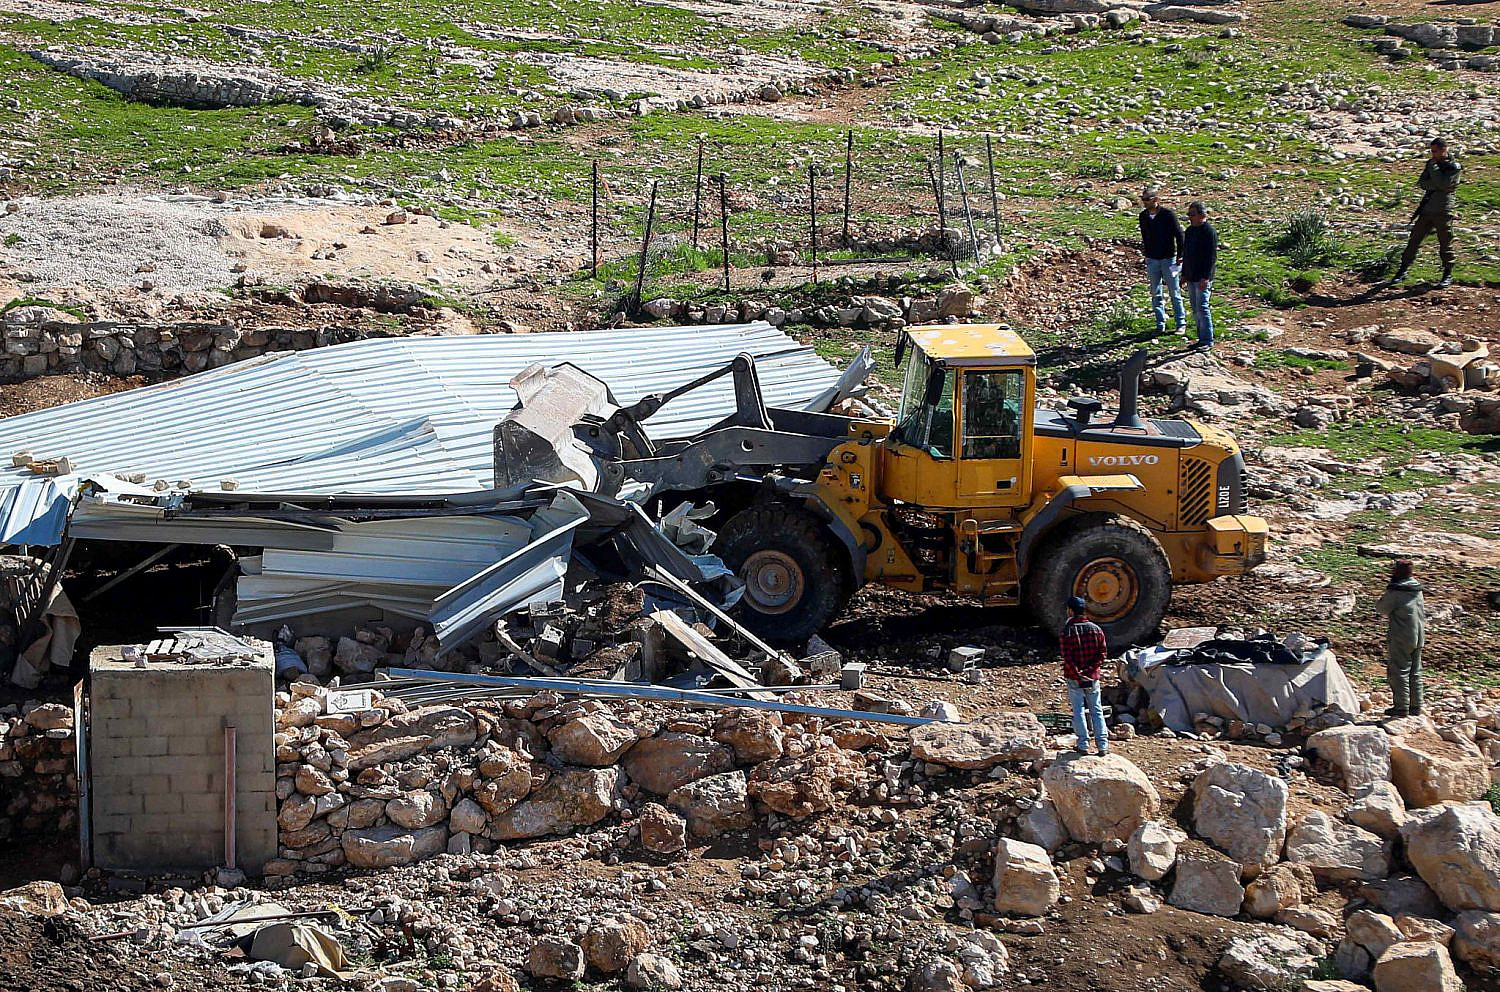 An Israeli bulldozer demolishes a Palestinian farm shed in the West Bank area of Masafer Yatta, February 27, 2020. (Wisam Hashlamoun/Flash90)